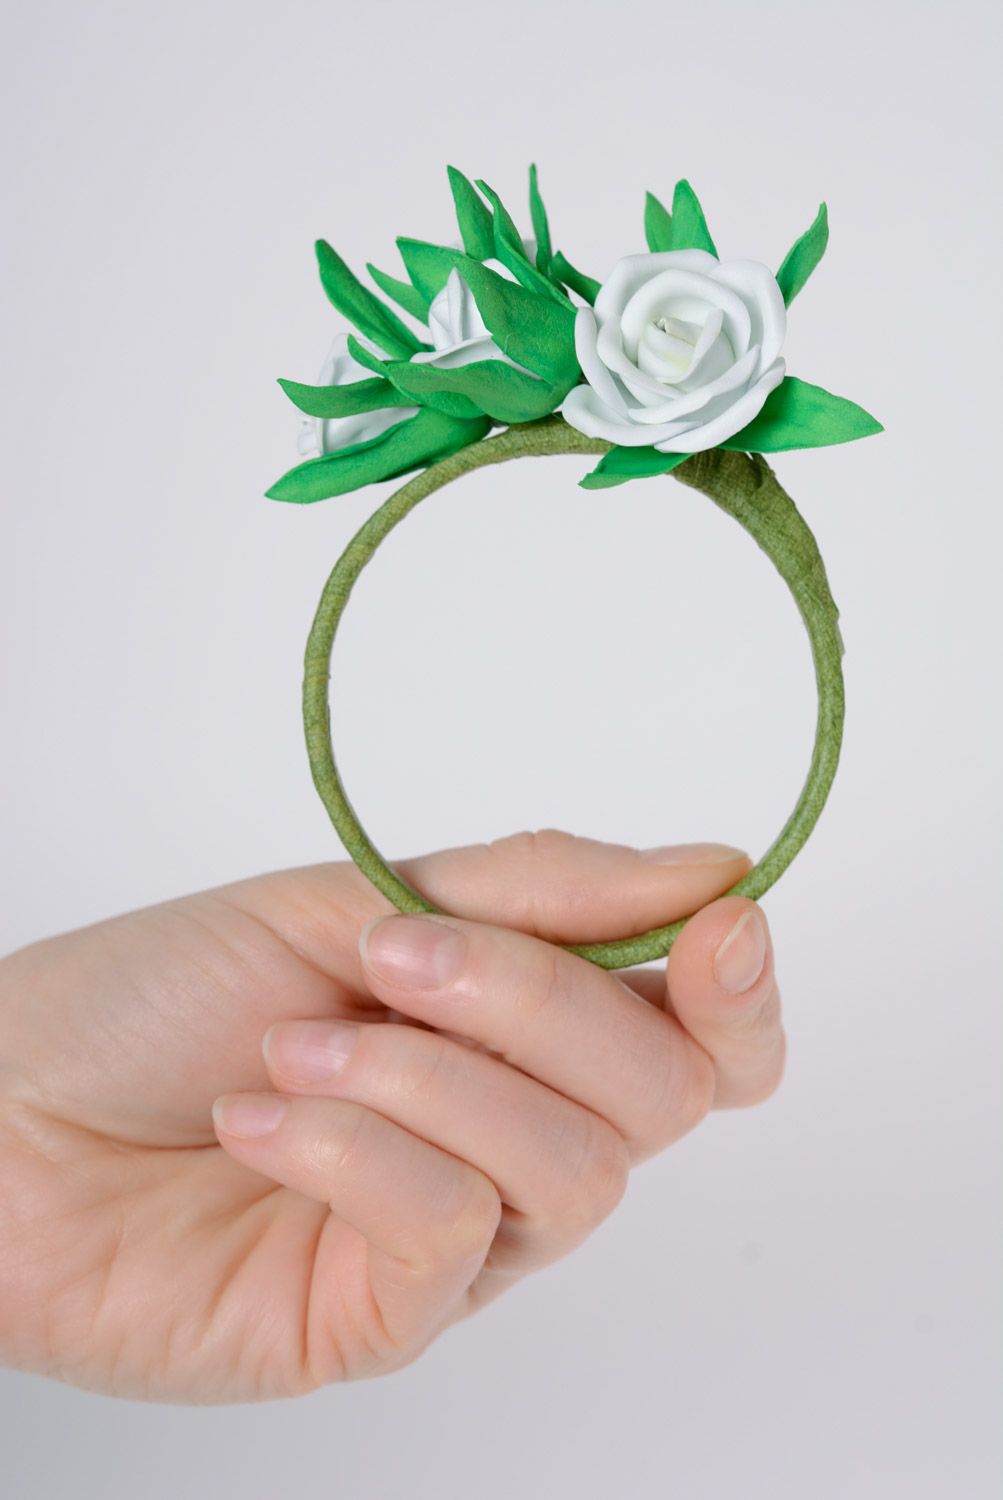 Handmade gentle foamiran fabric wrist bracelet with white flowers on green basis photo 3